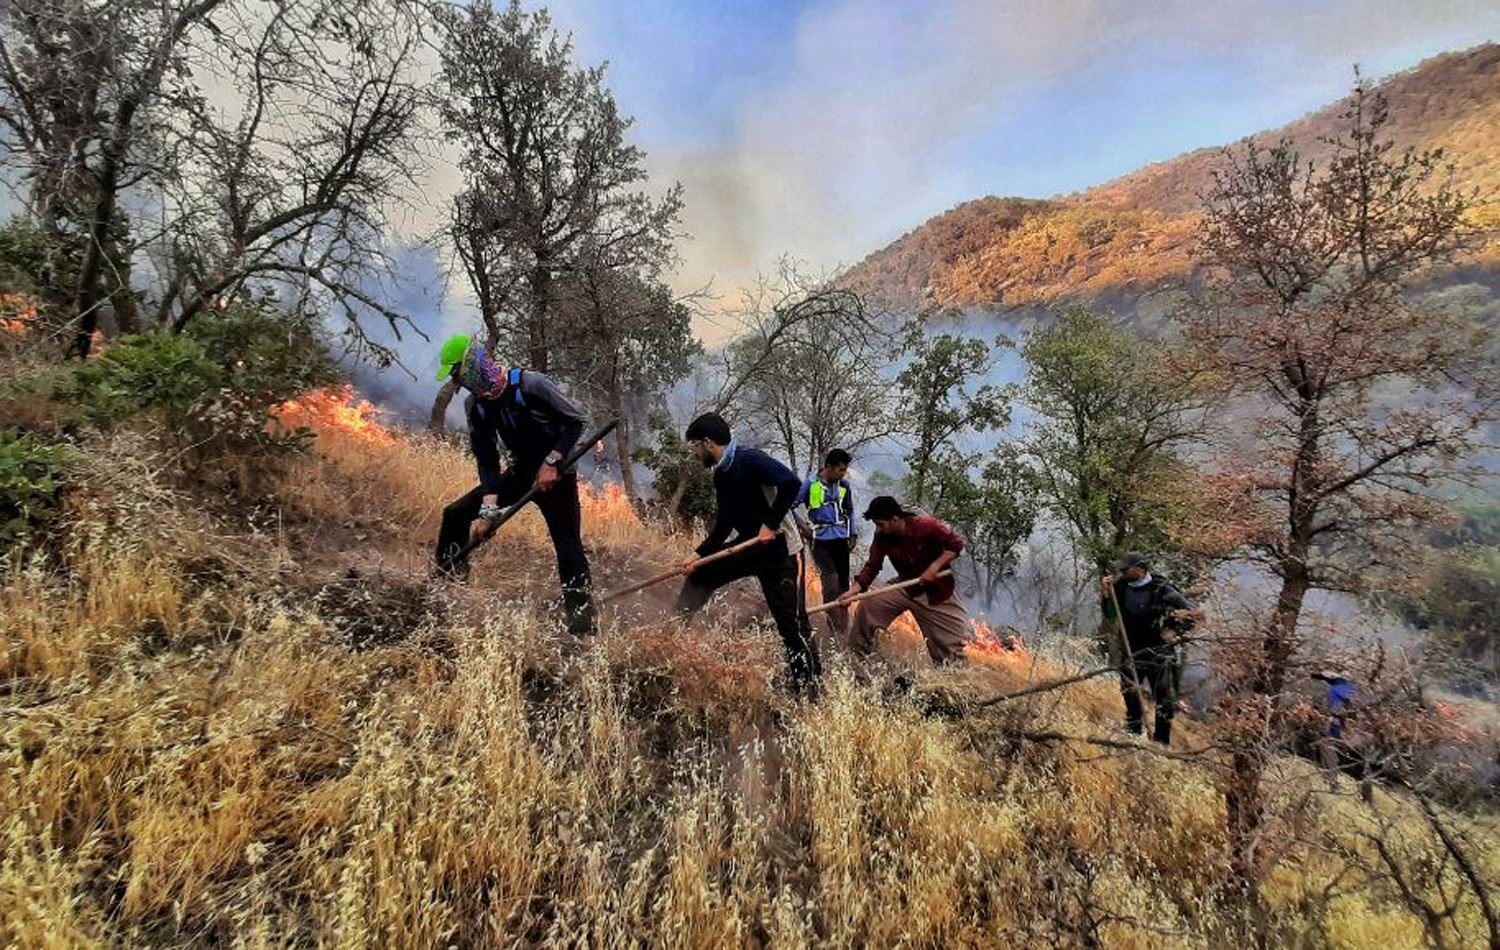 Landmines, wind, scorpions: Firefighters battle hazards to extinguish the flames